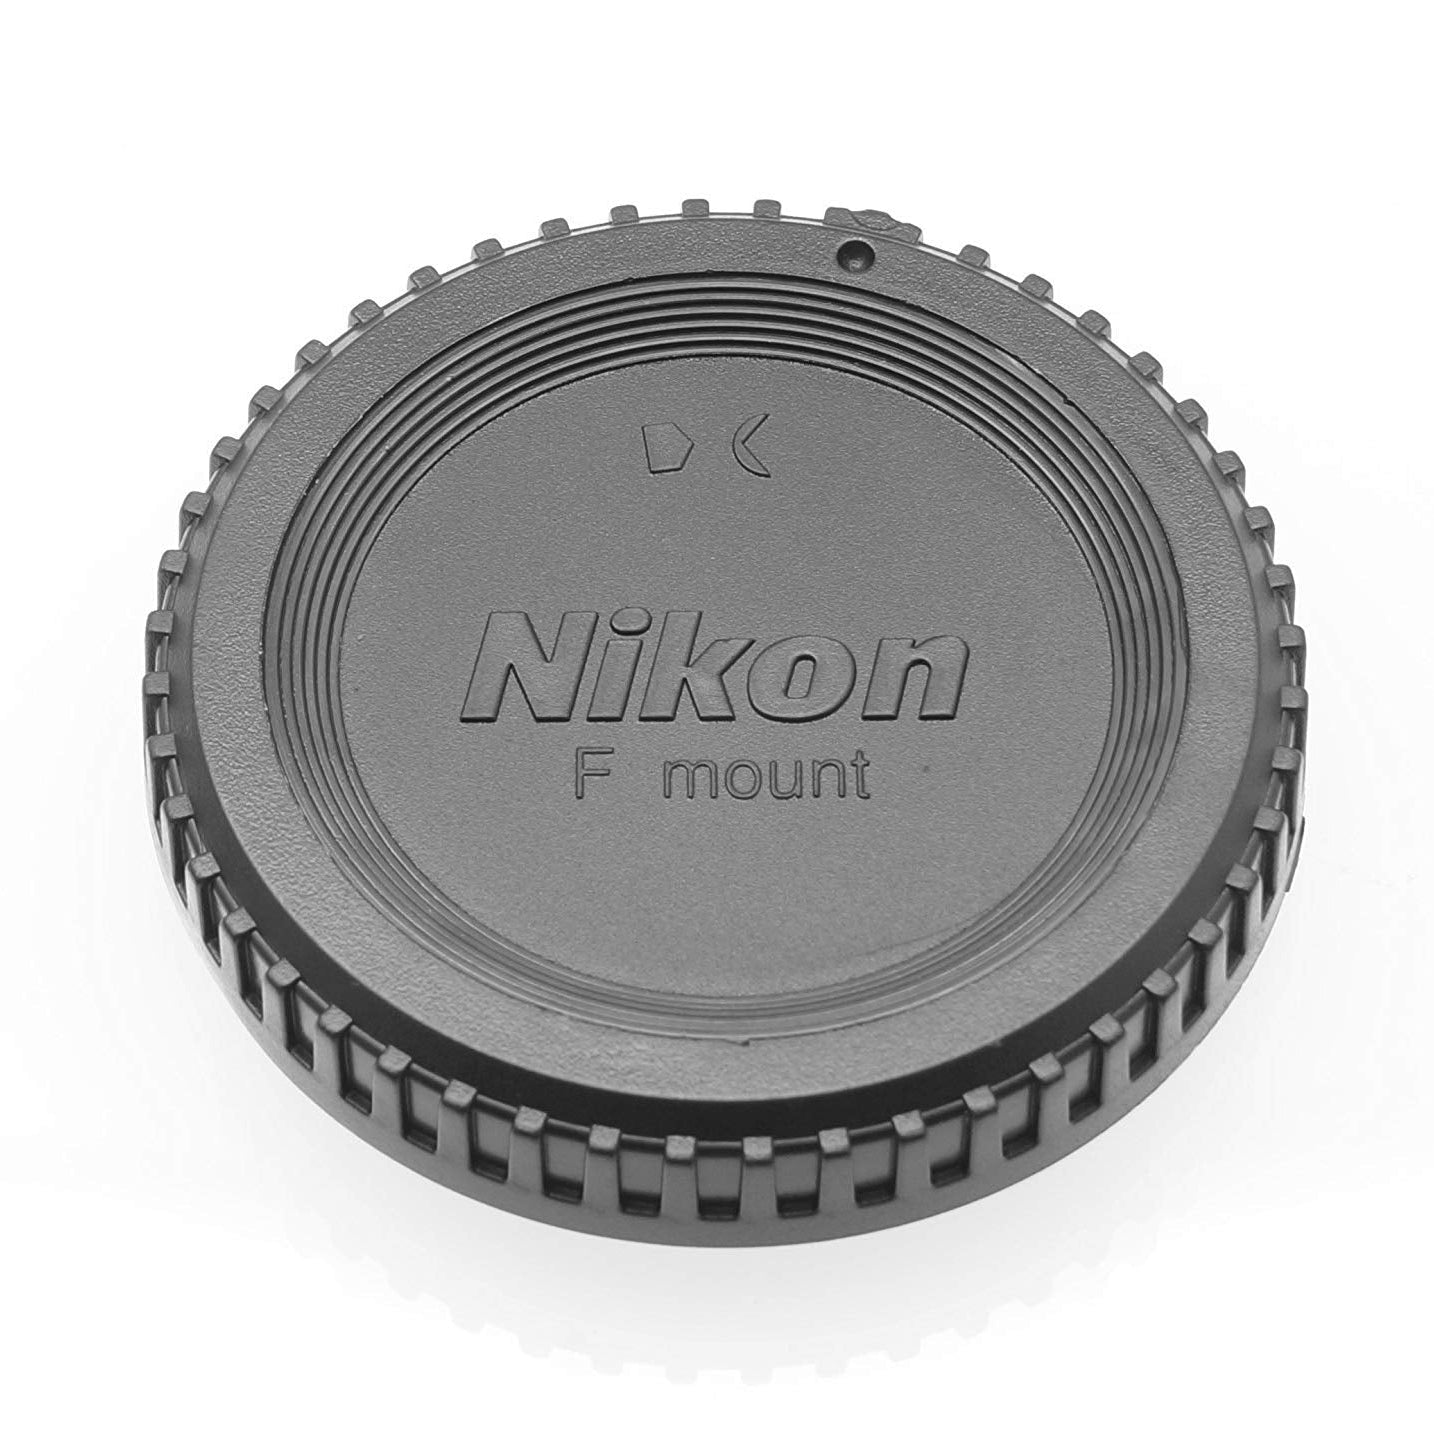 Omax Replacement body-cap for All Nikon DSLR Camera - The Camerashop